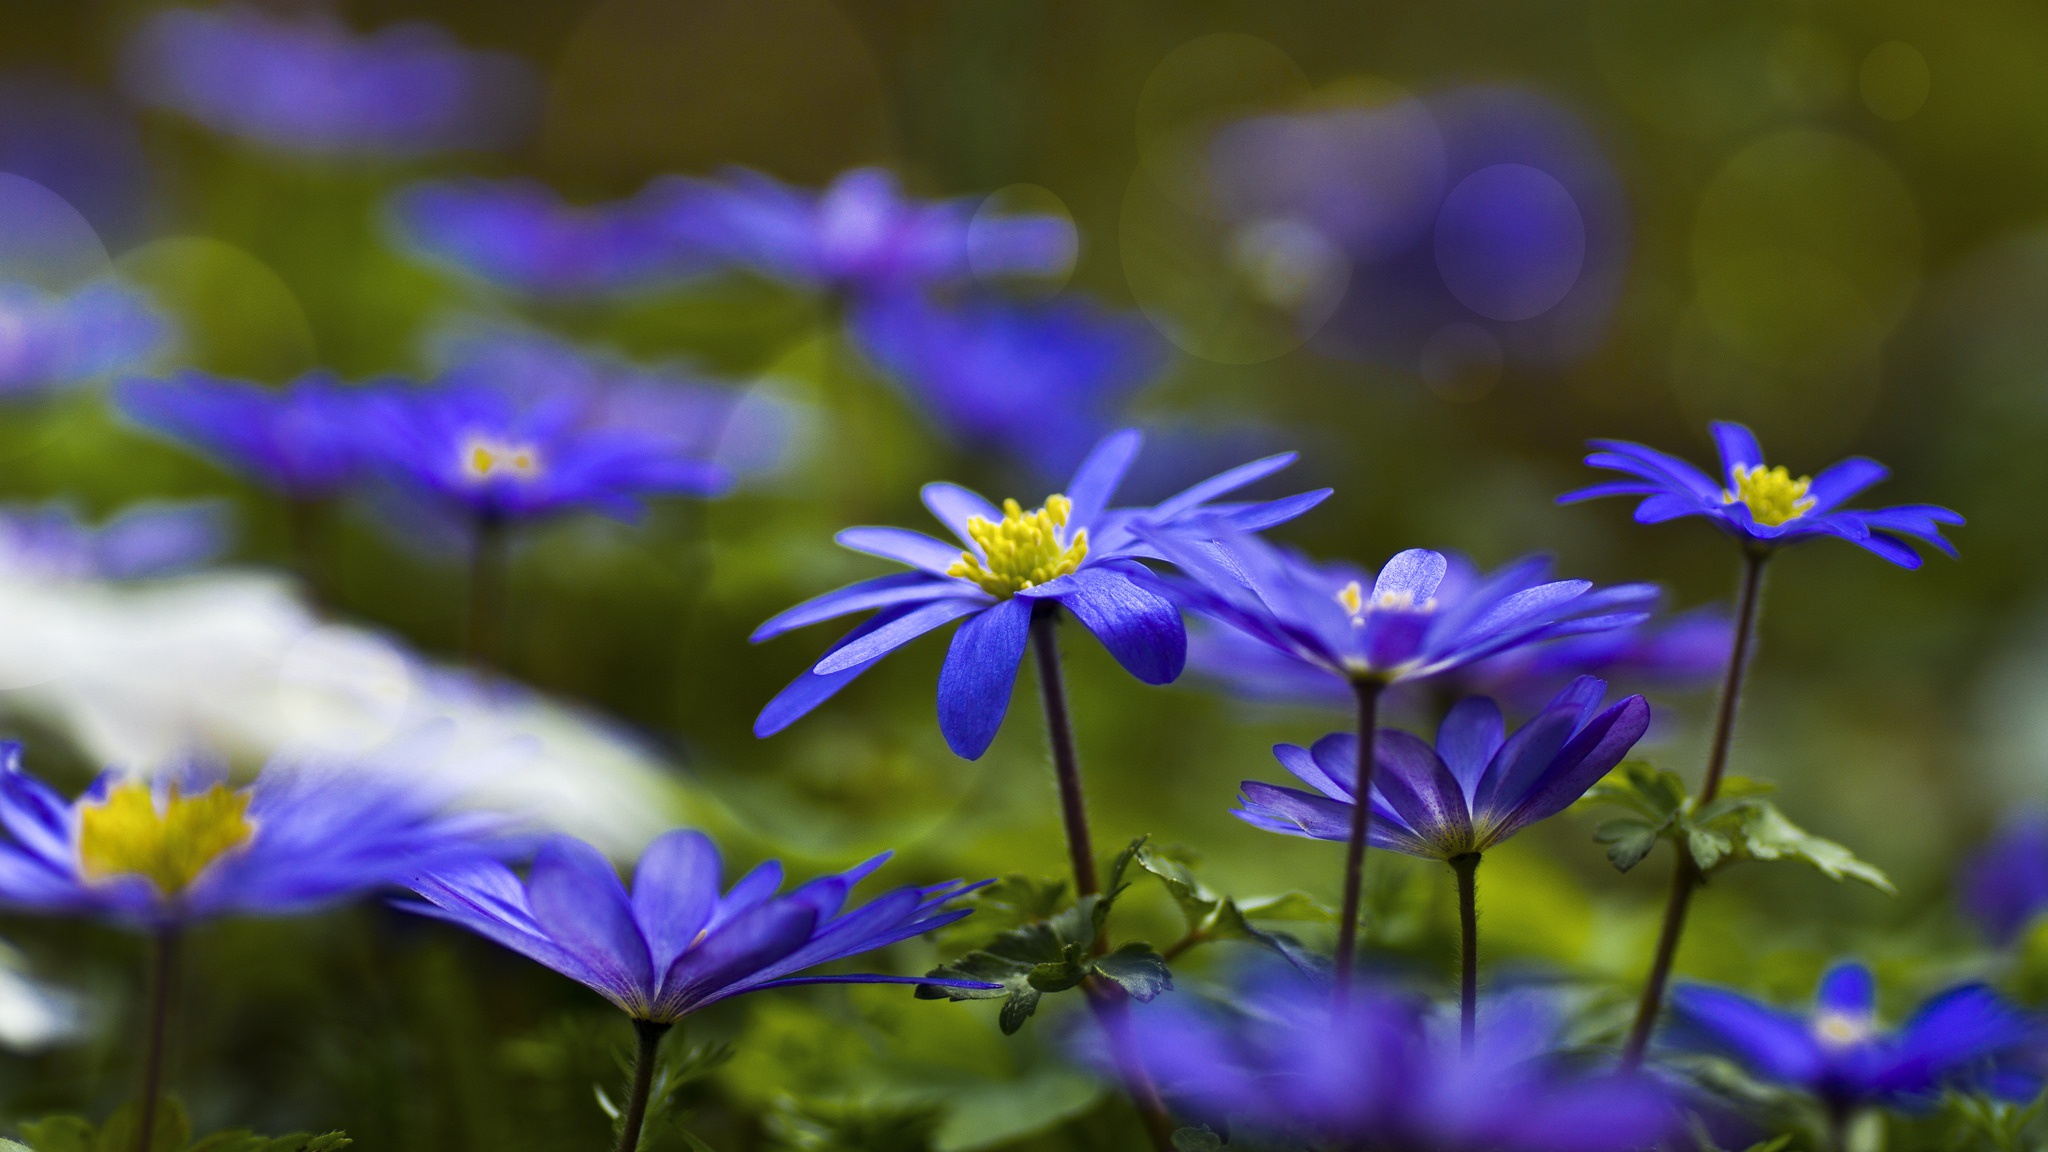 Descarga gratis la imagen Naturaleza, Flores, Flor, Bokeh, Tierra/naturaleza, Flor Azul en el escritorio de tu PC